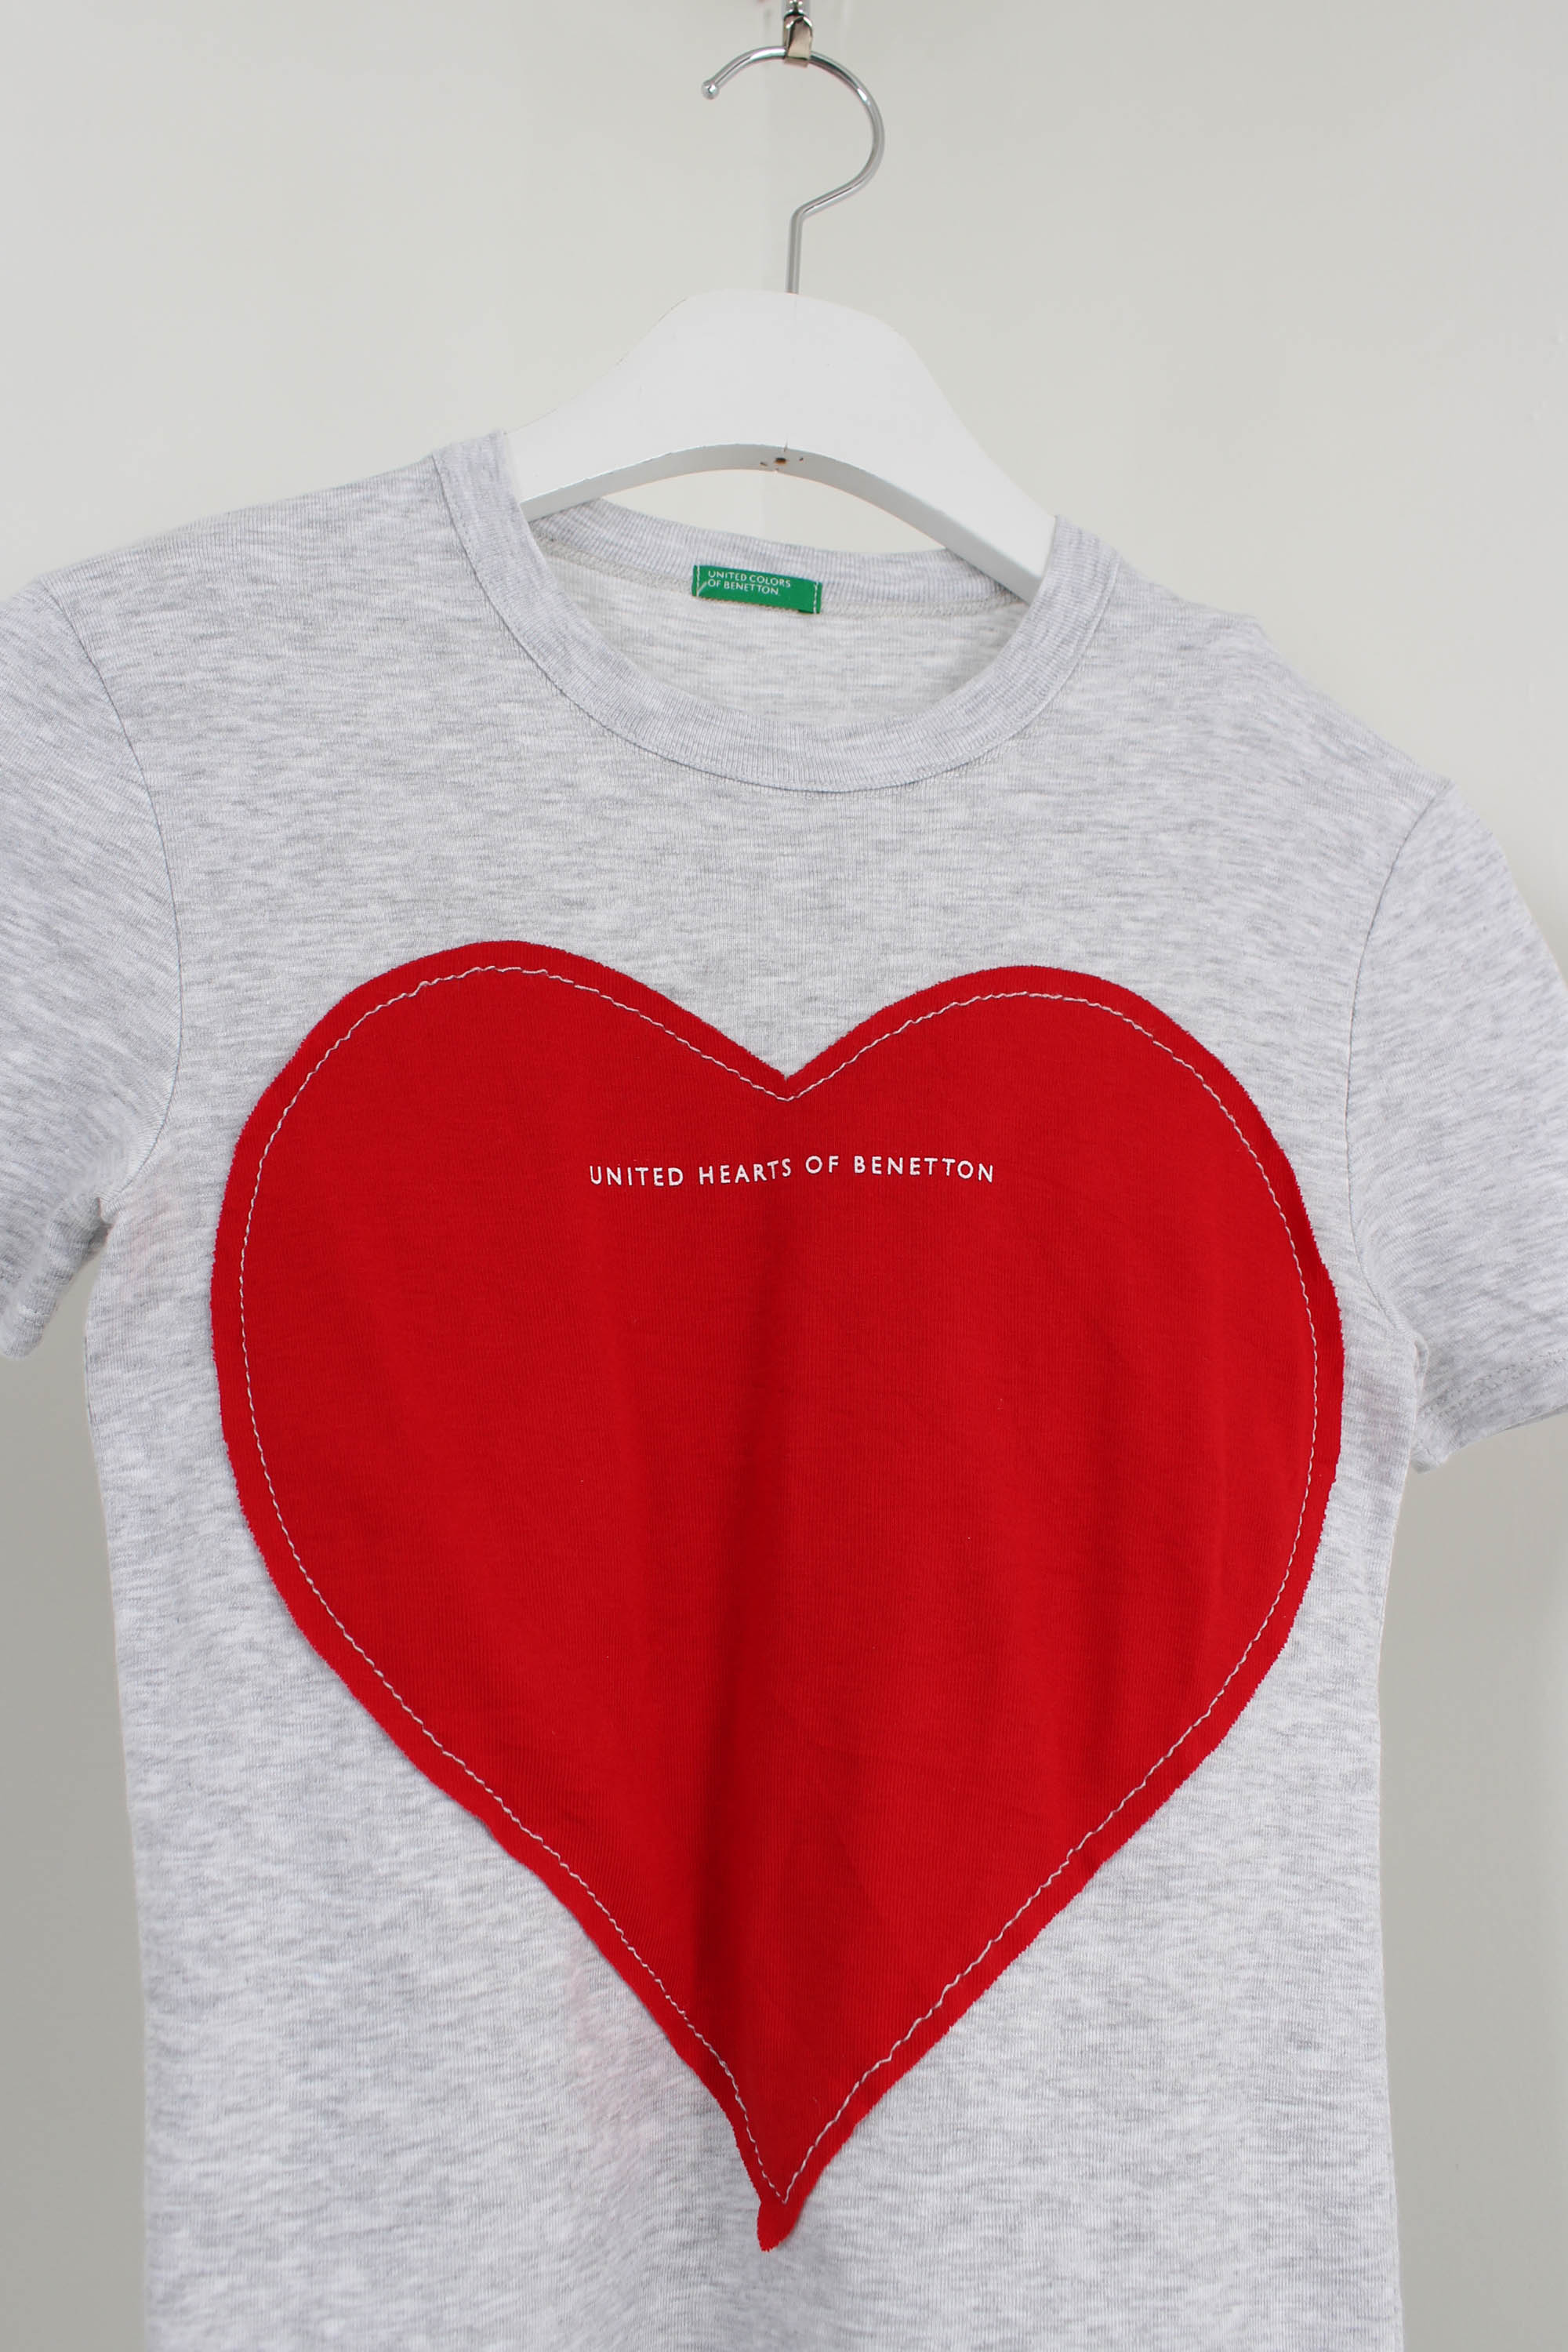 BENETTON hearts t-shirt